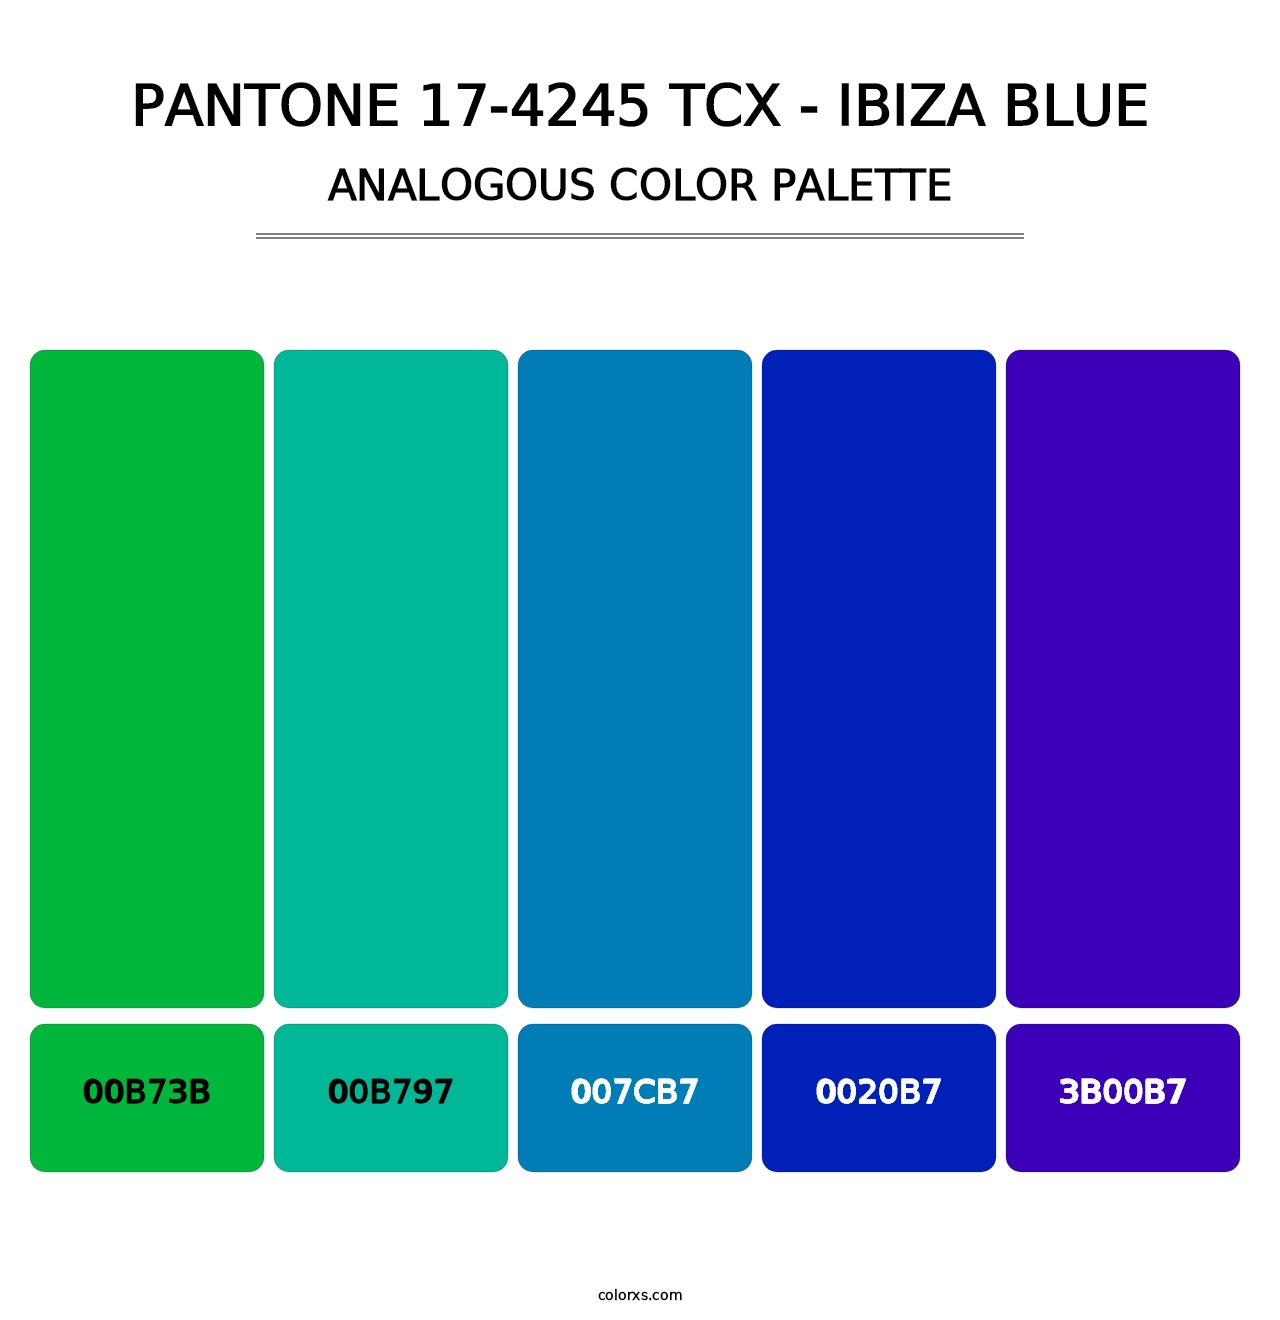 PANTONE 17-4245 TCX - Ibiza Blue - Analogous Color Palette